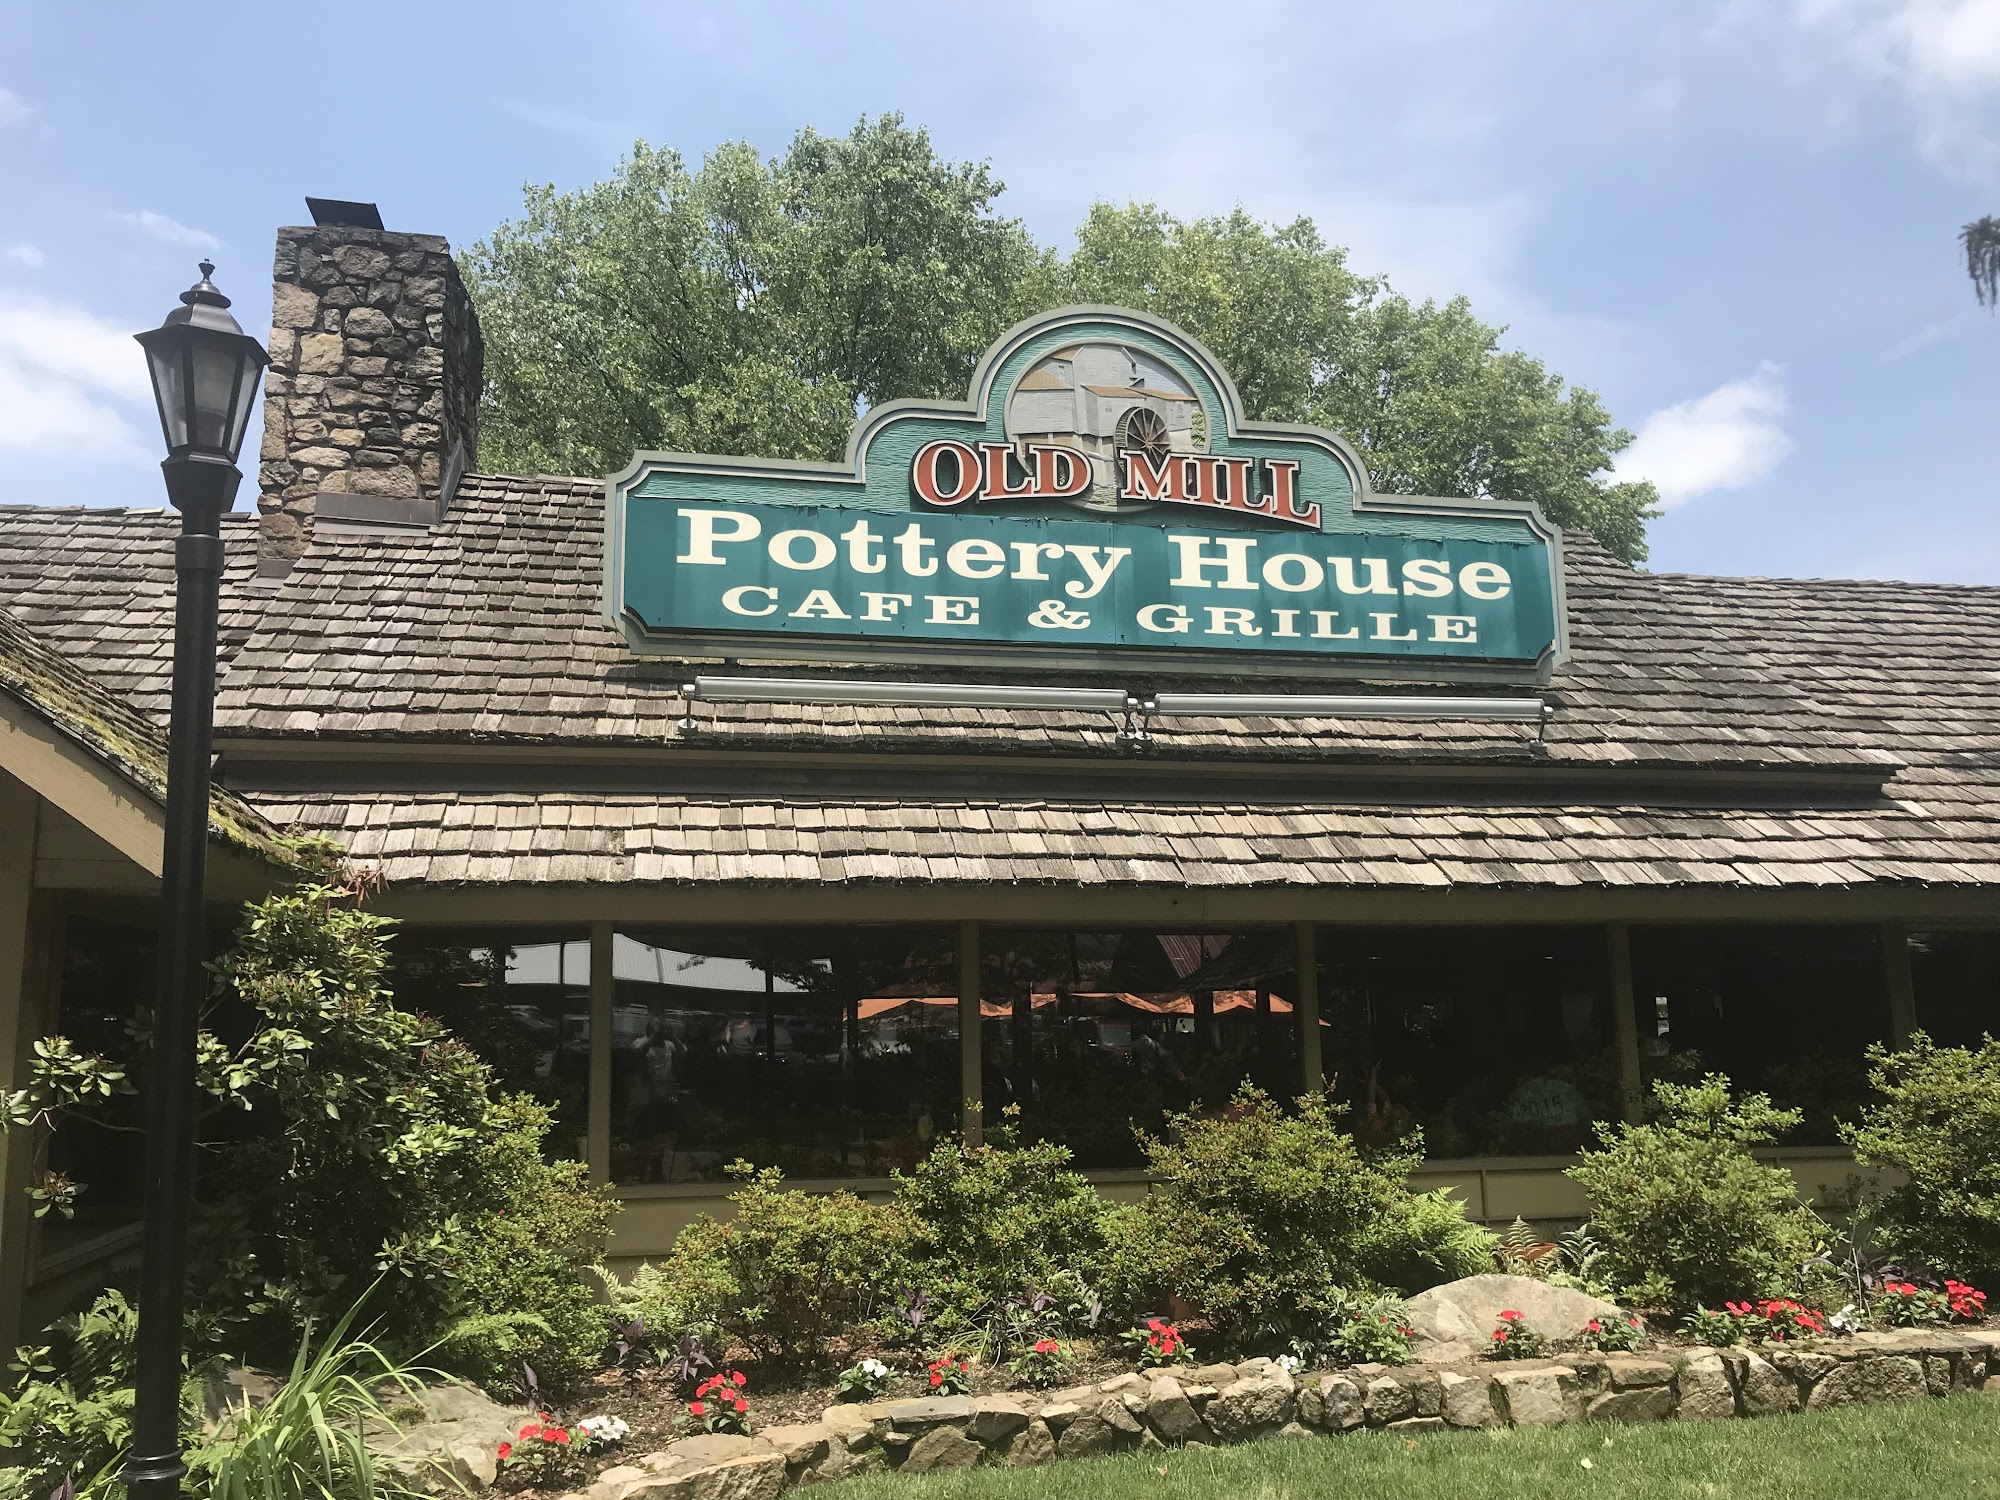 The Old Mill Pottery House Café